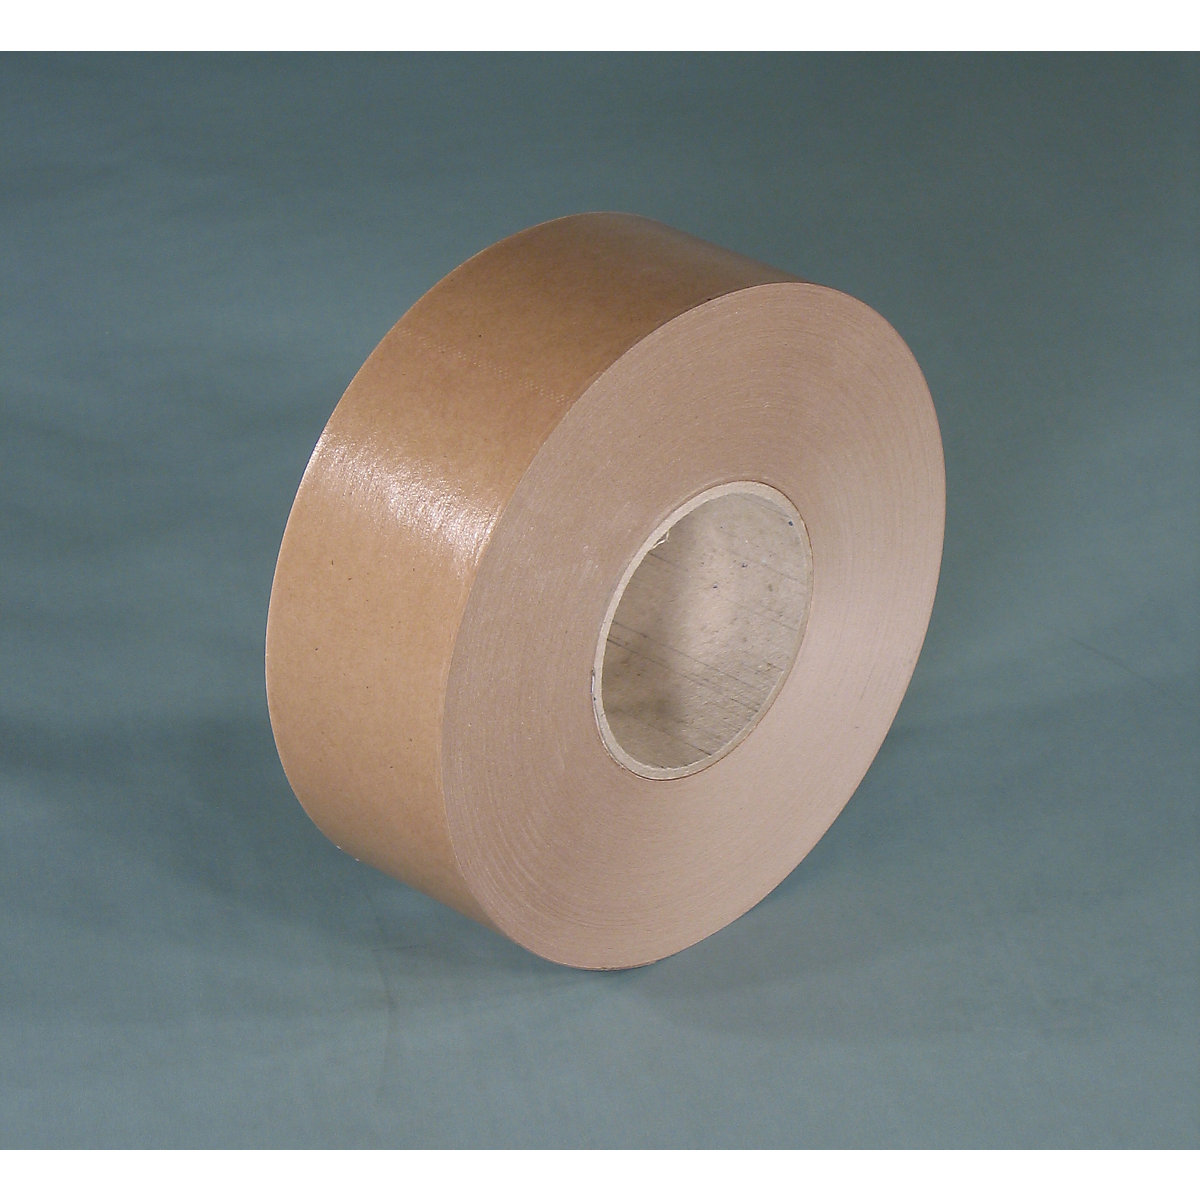 Cinta adhesiva en húmedo – eurokraft basic, modelo sencillo, UE 12 rollos, marrón, anchura de cinta 60 mm-1